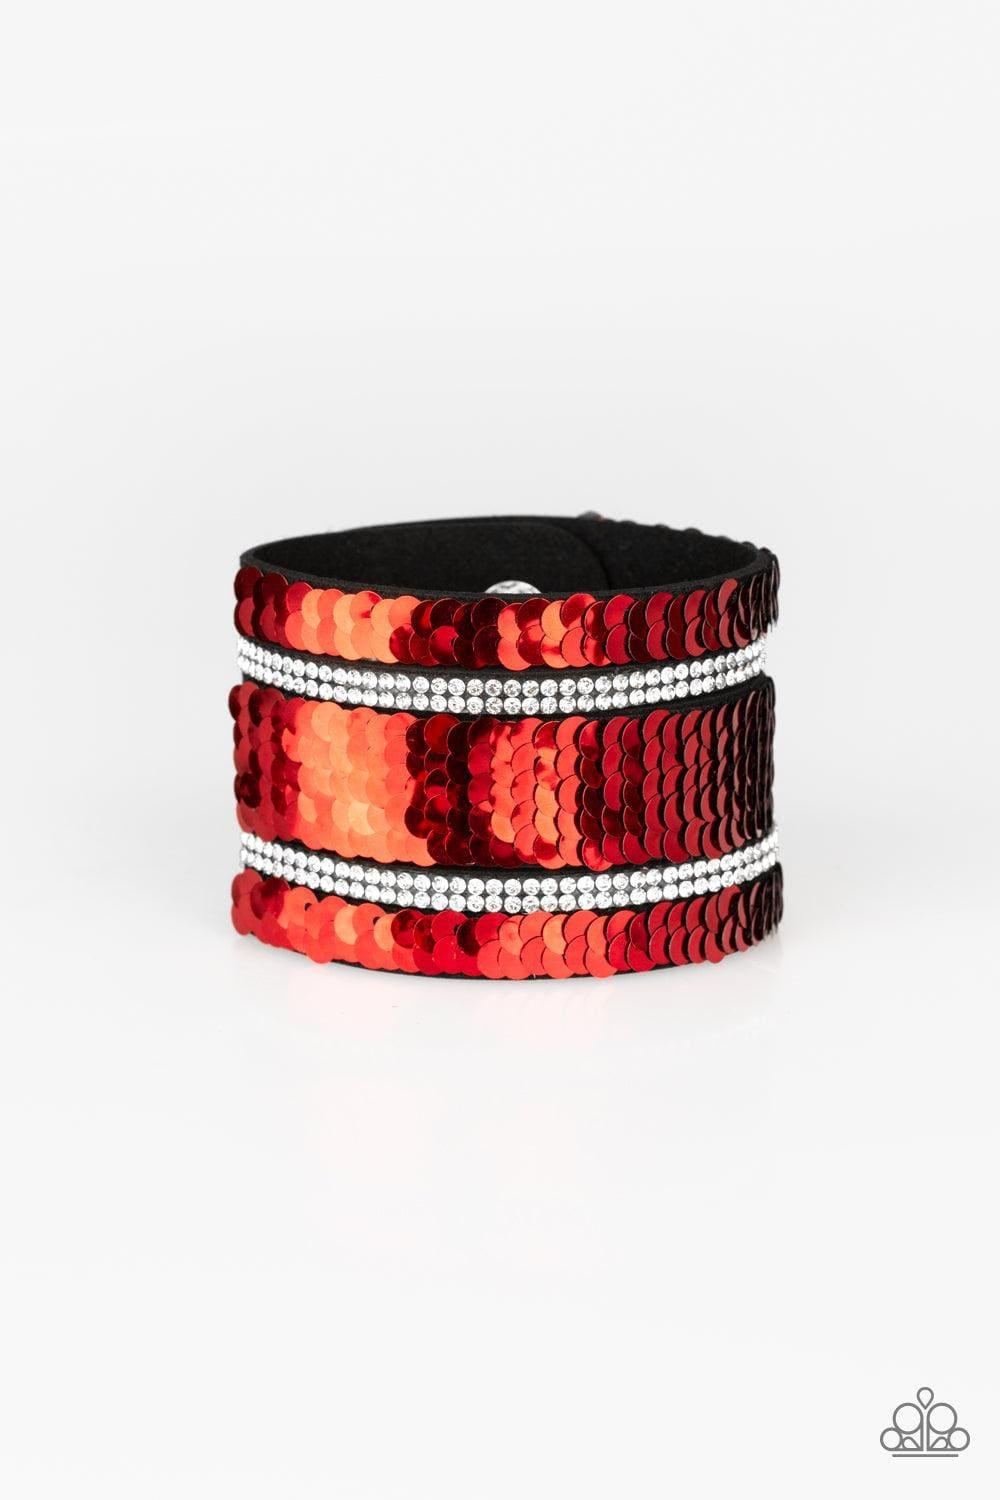 Paparazzi Accessories - Mermaid Service - Red/silver Snap Bracelet - Bling by JessieK